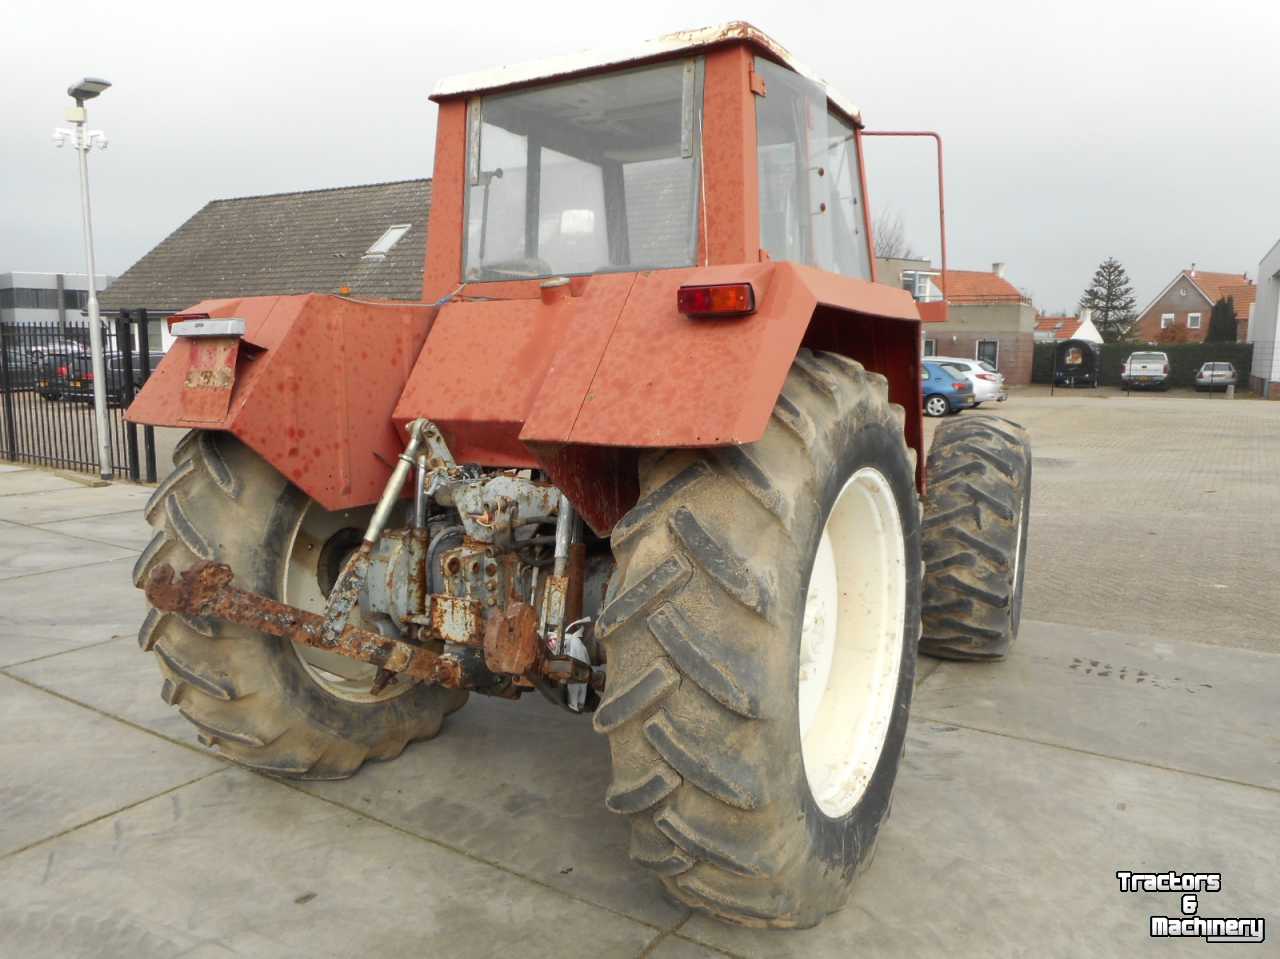 Tractors Steyr 8160